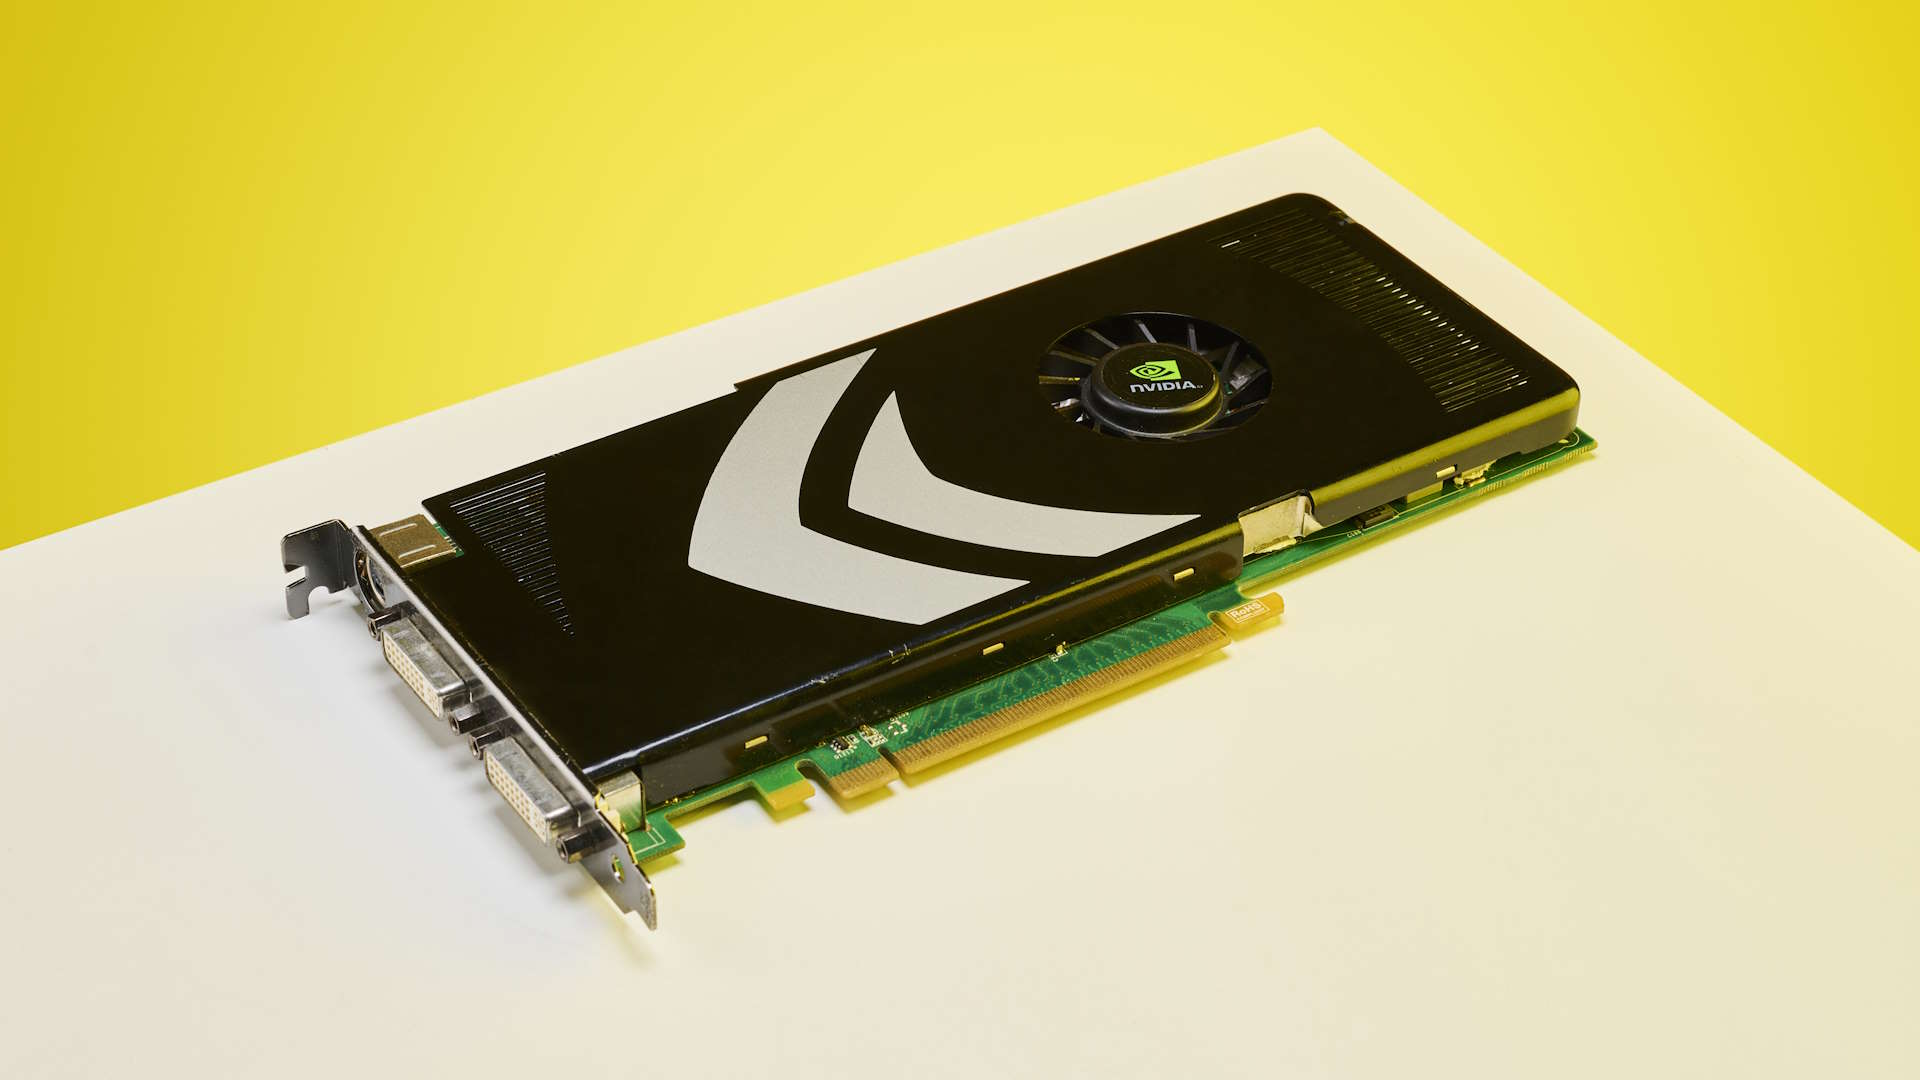 Nvidia 8800 GT graphics card